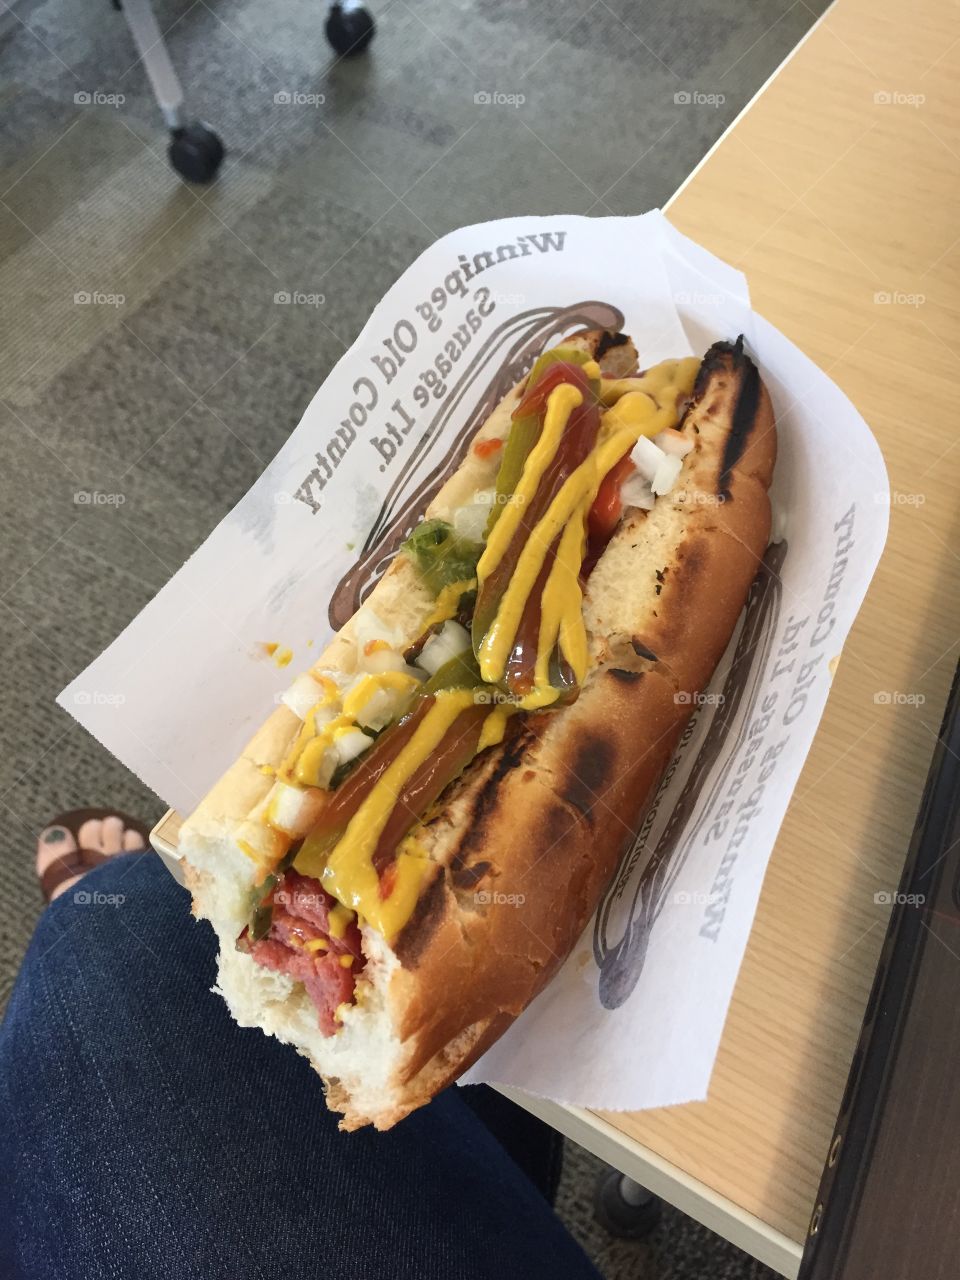 Hot dog lunch